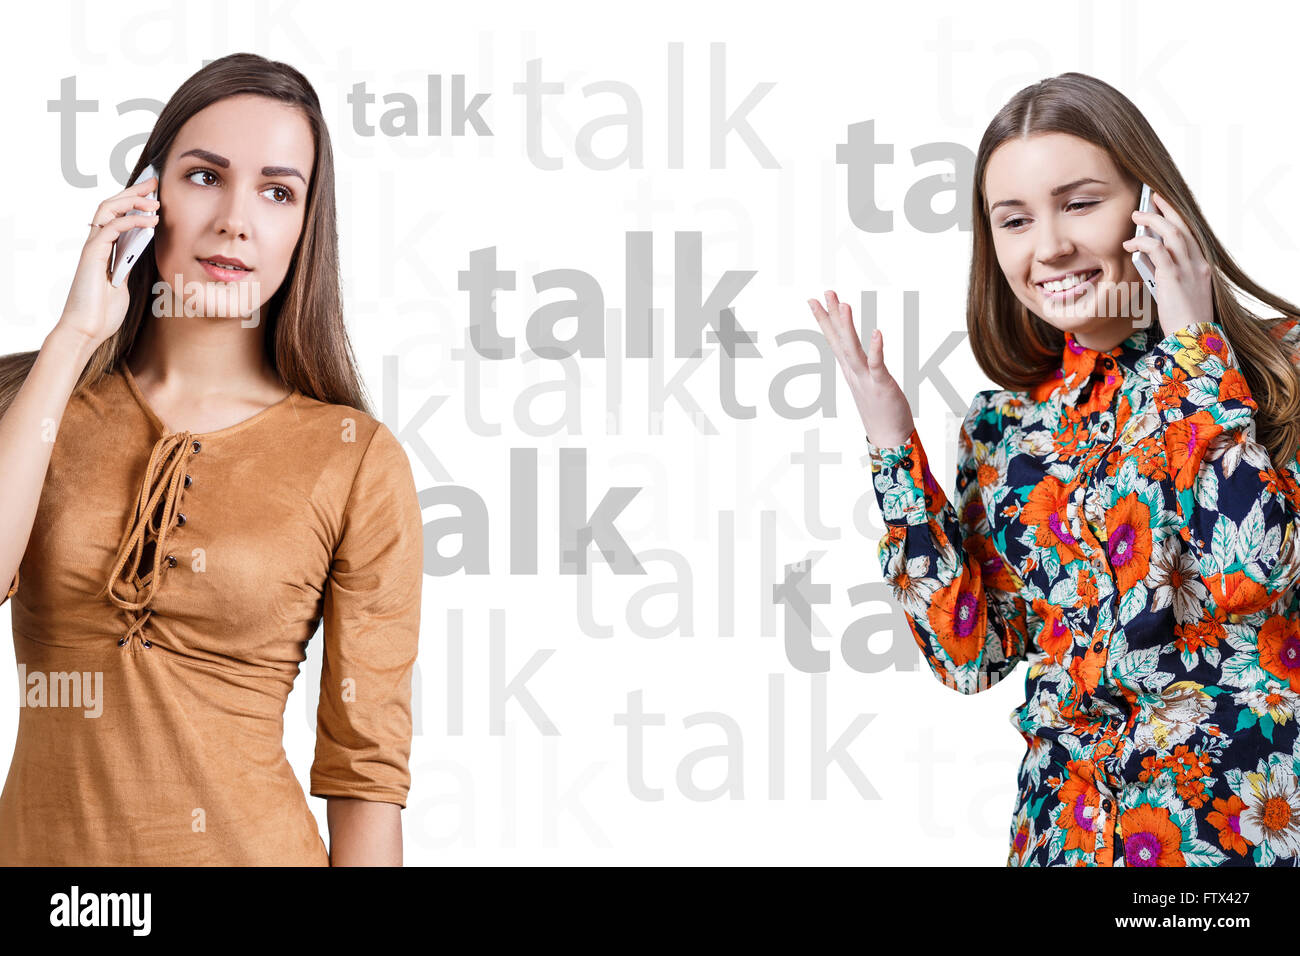 Junge Frauen am Telefon sprechen Stockfoto